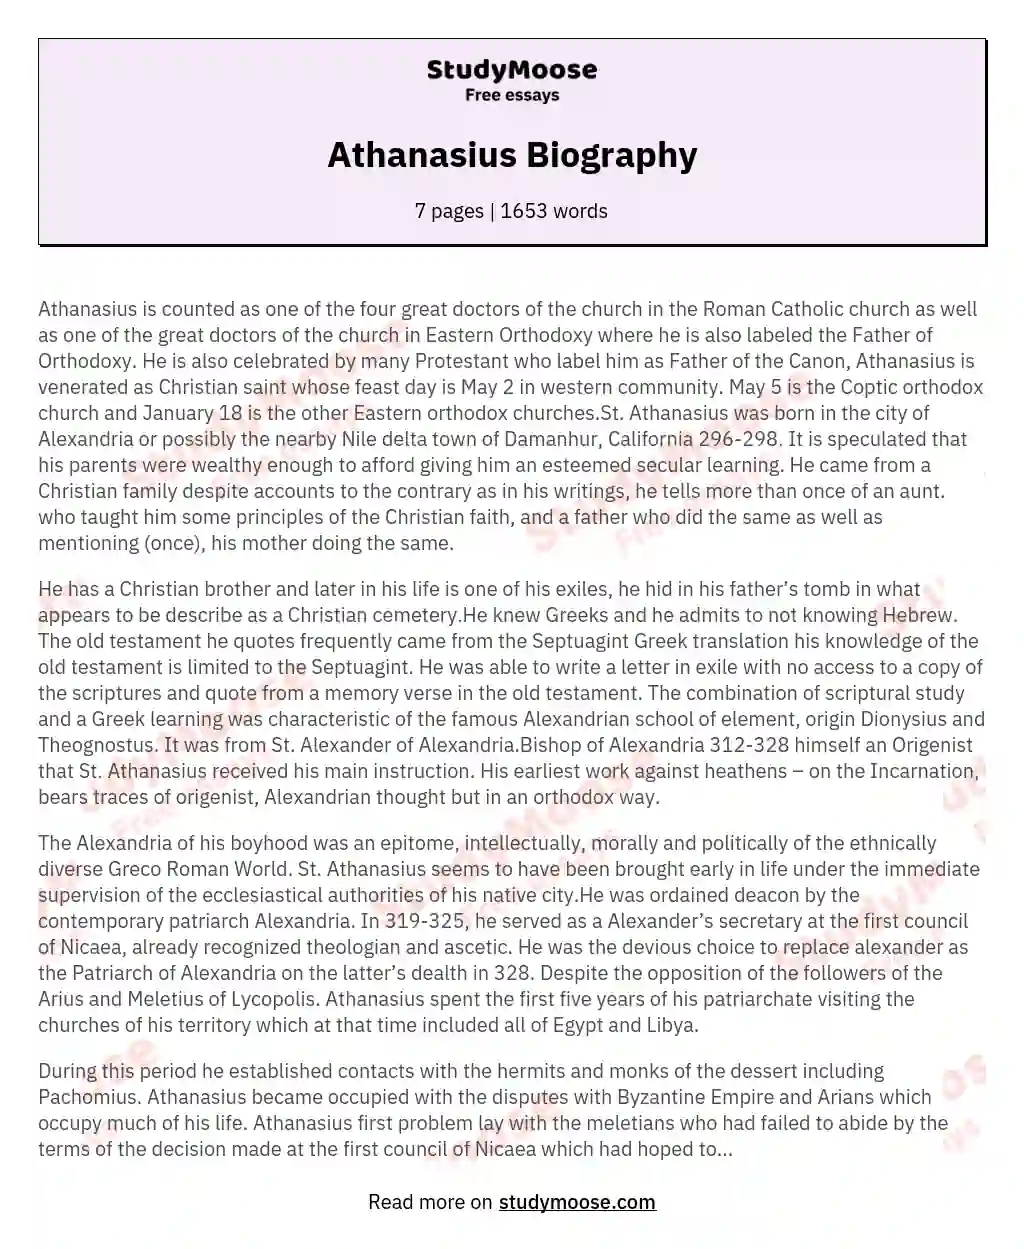 Athanasius Biography essay